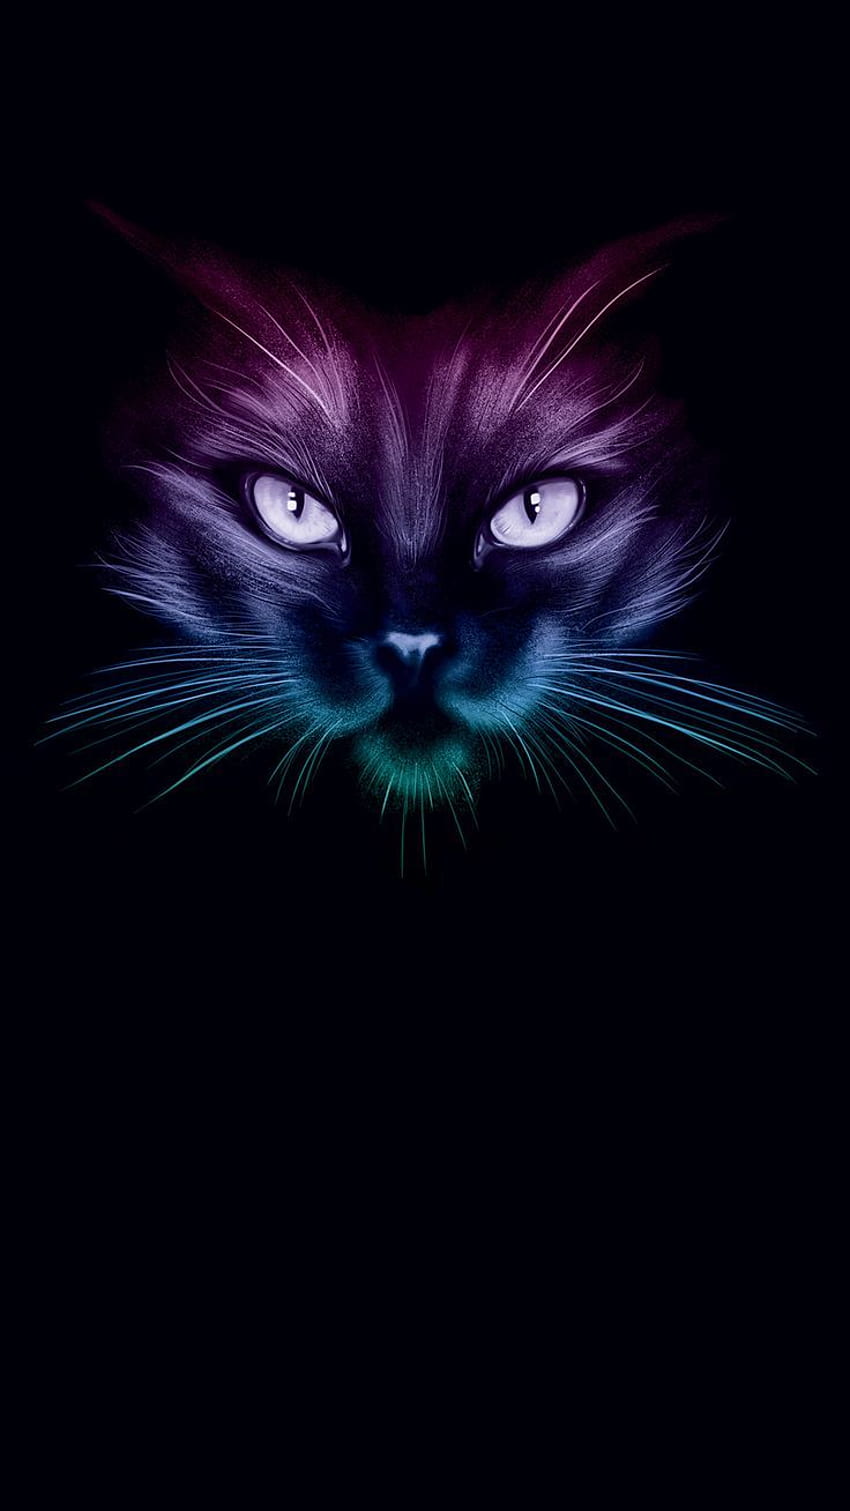 Purple Cat Wallpaper Images  Free Download on Freepik